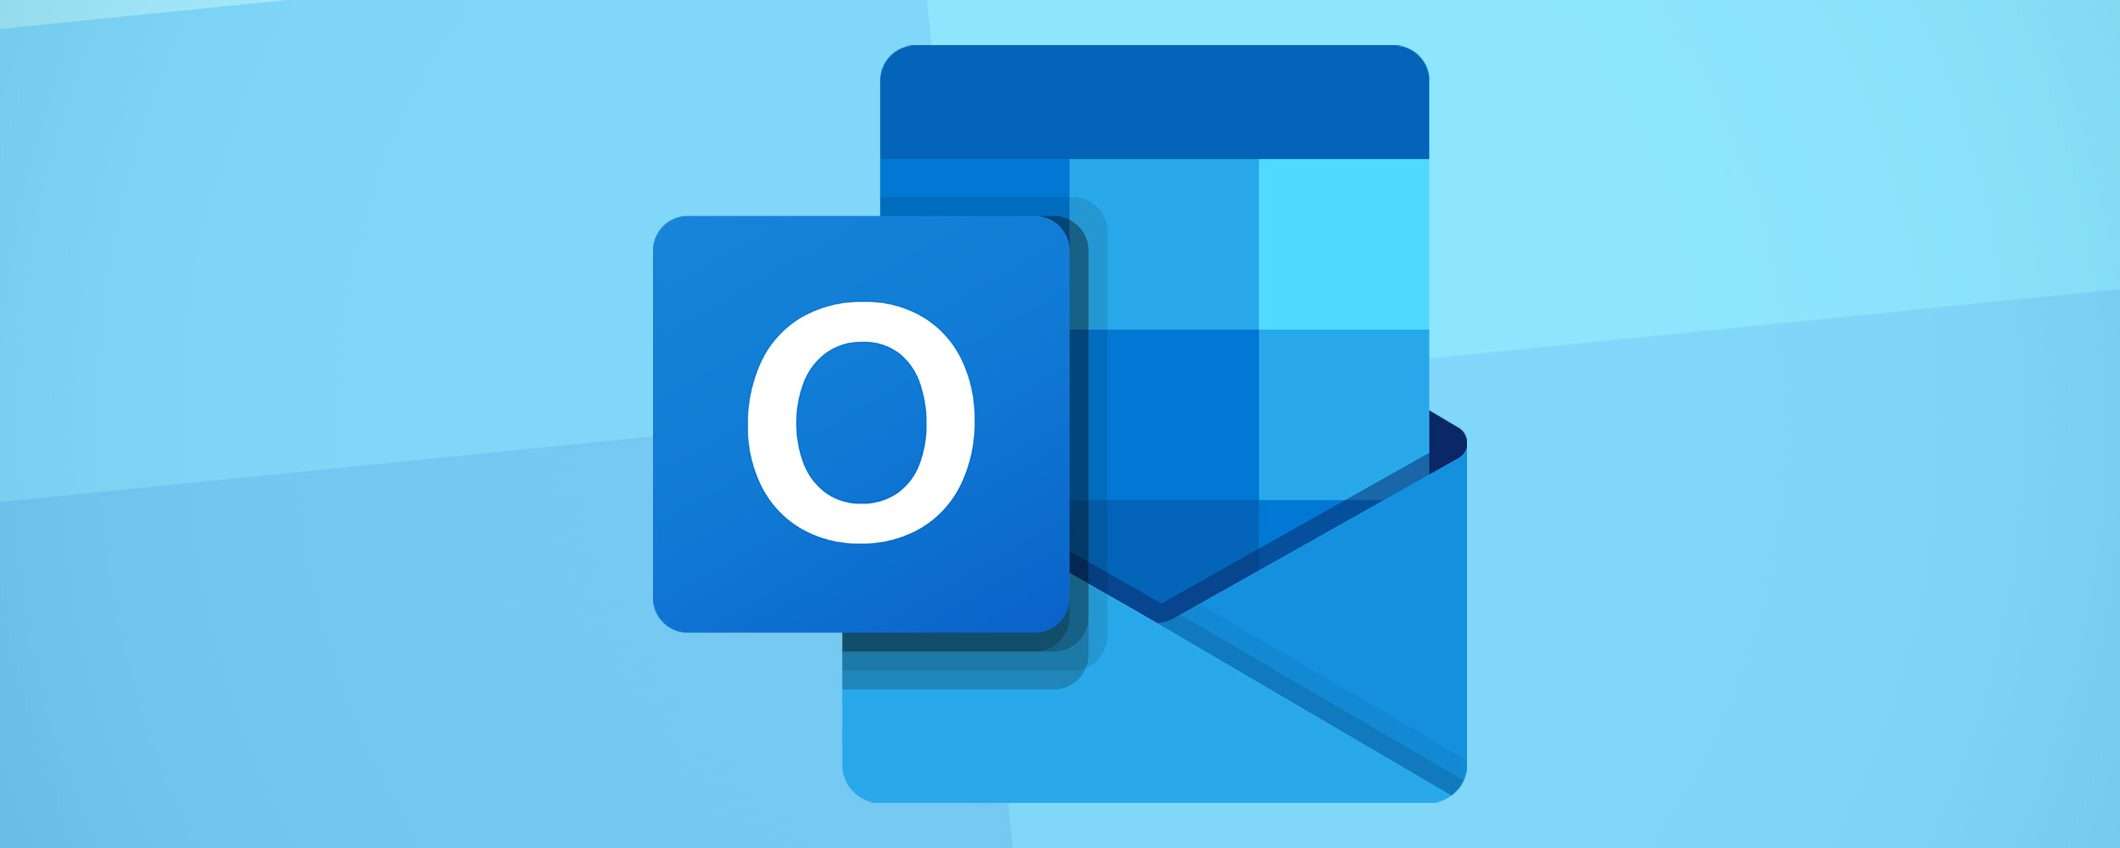 One Outlook: Microsoft da il via ai test pubblici